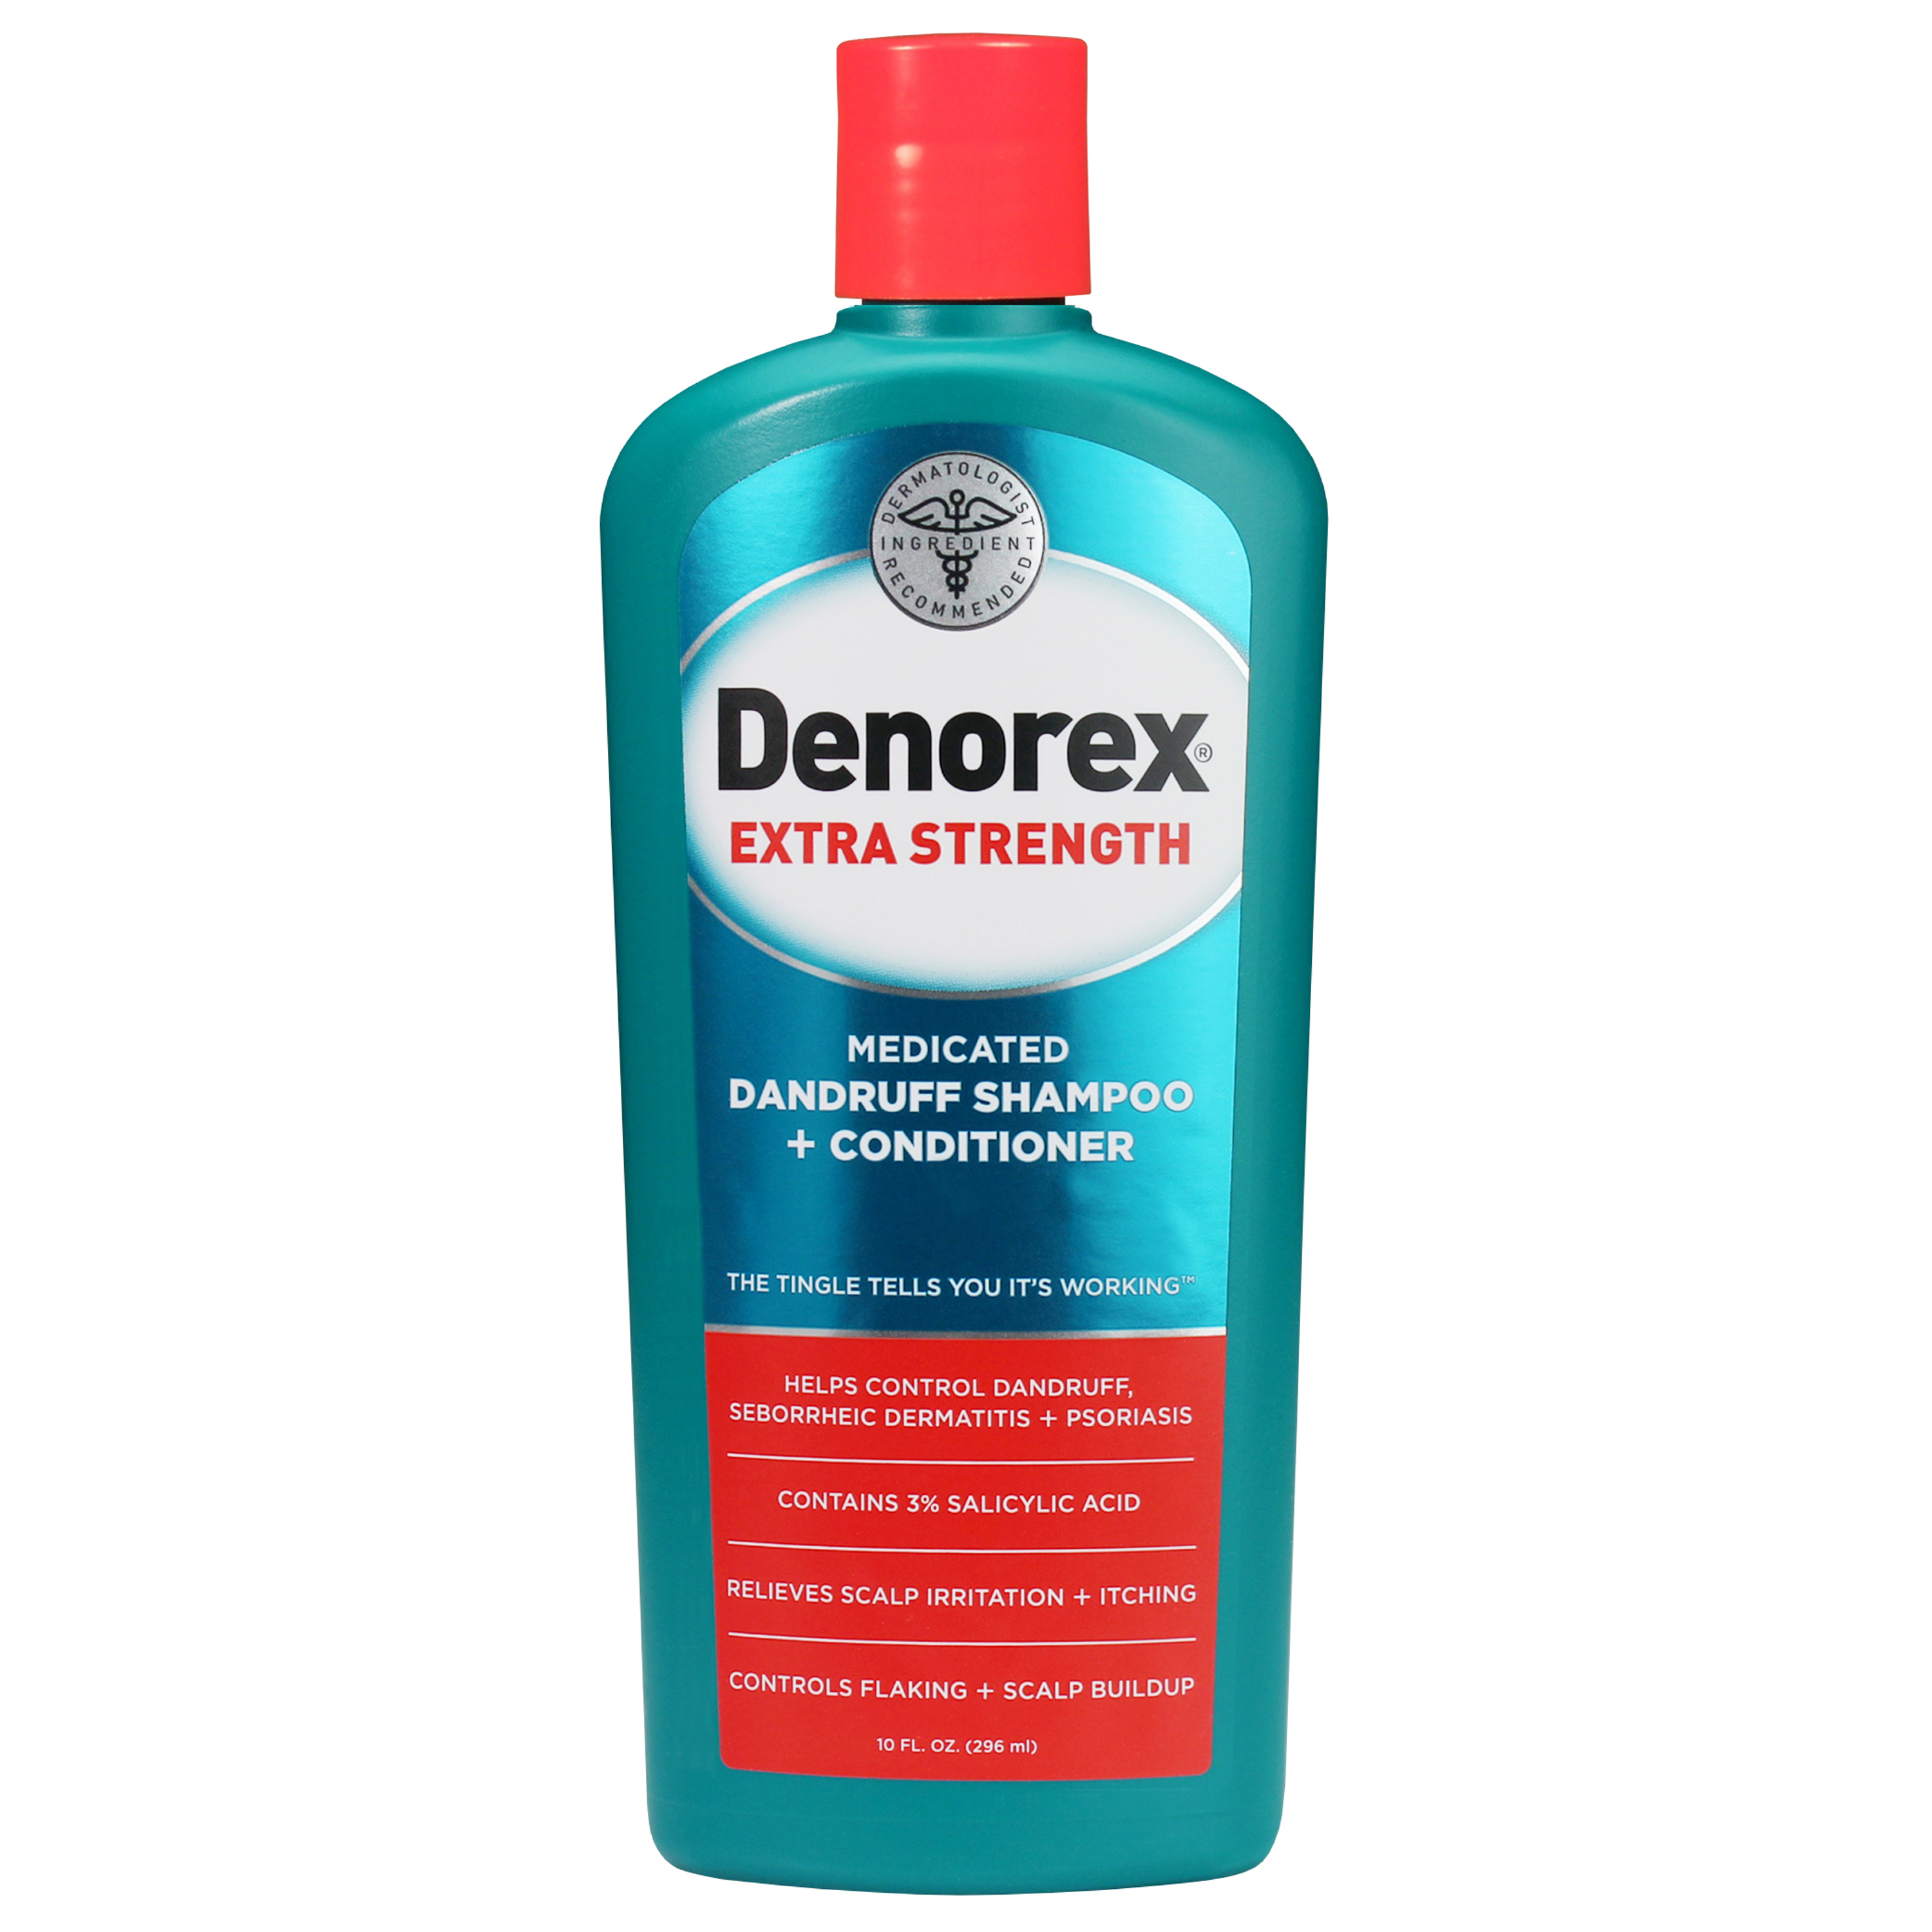 Denorex Extra Strength Medicated Dandruff Shampoo and Conditioner, 10 fl oz - image 1 of 9